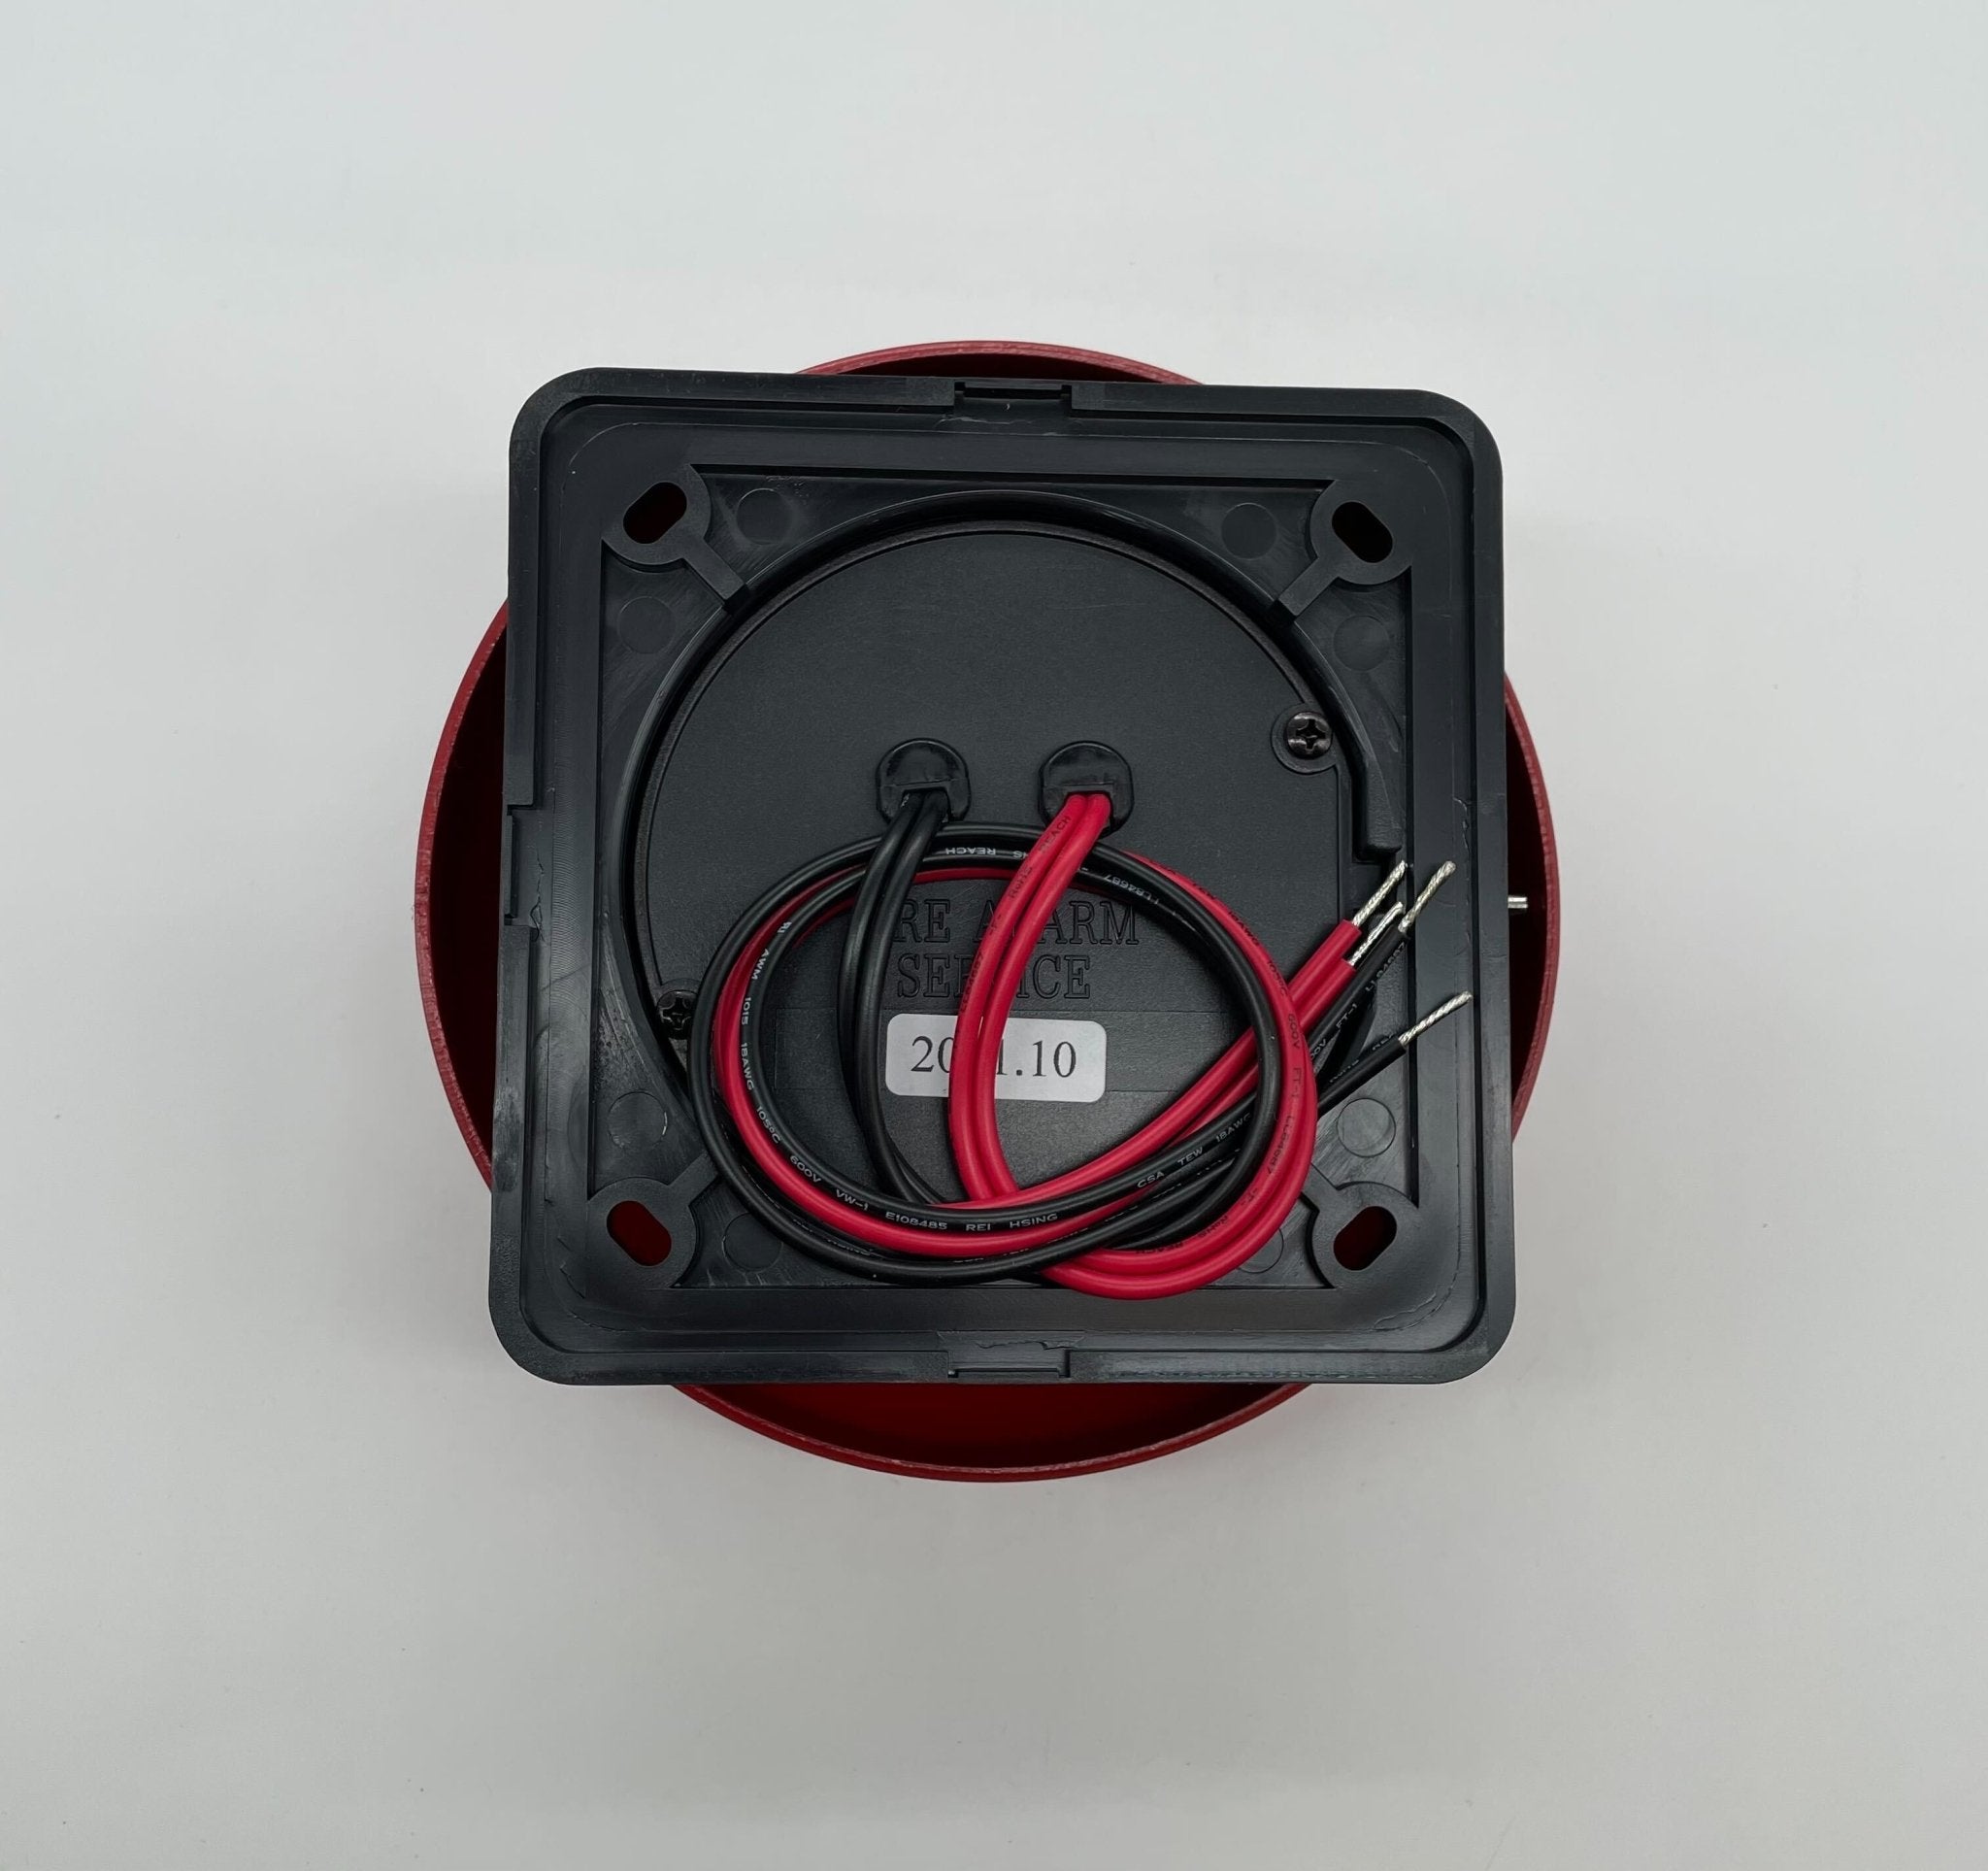 Mircom BL-6B - The Fire Alarm Supplier